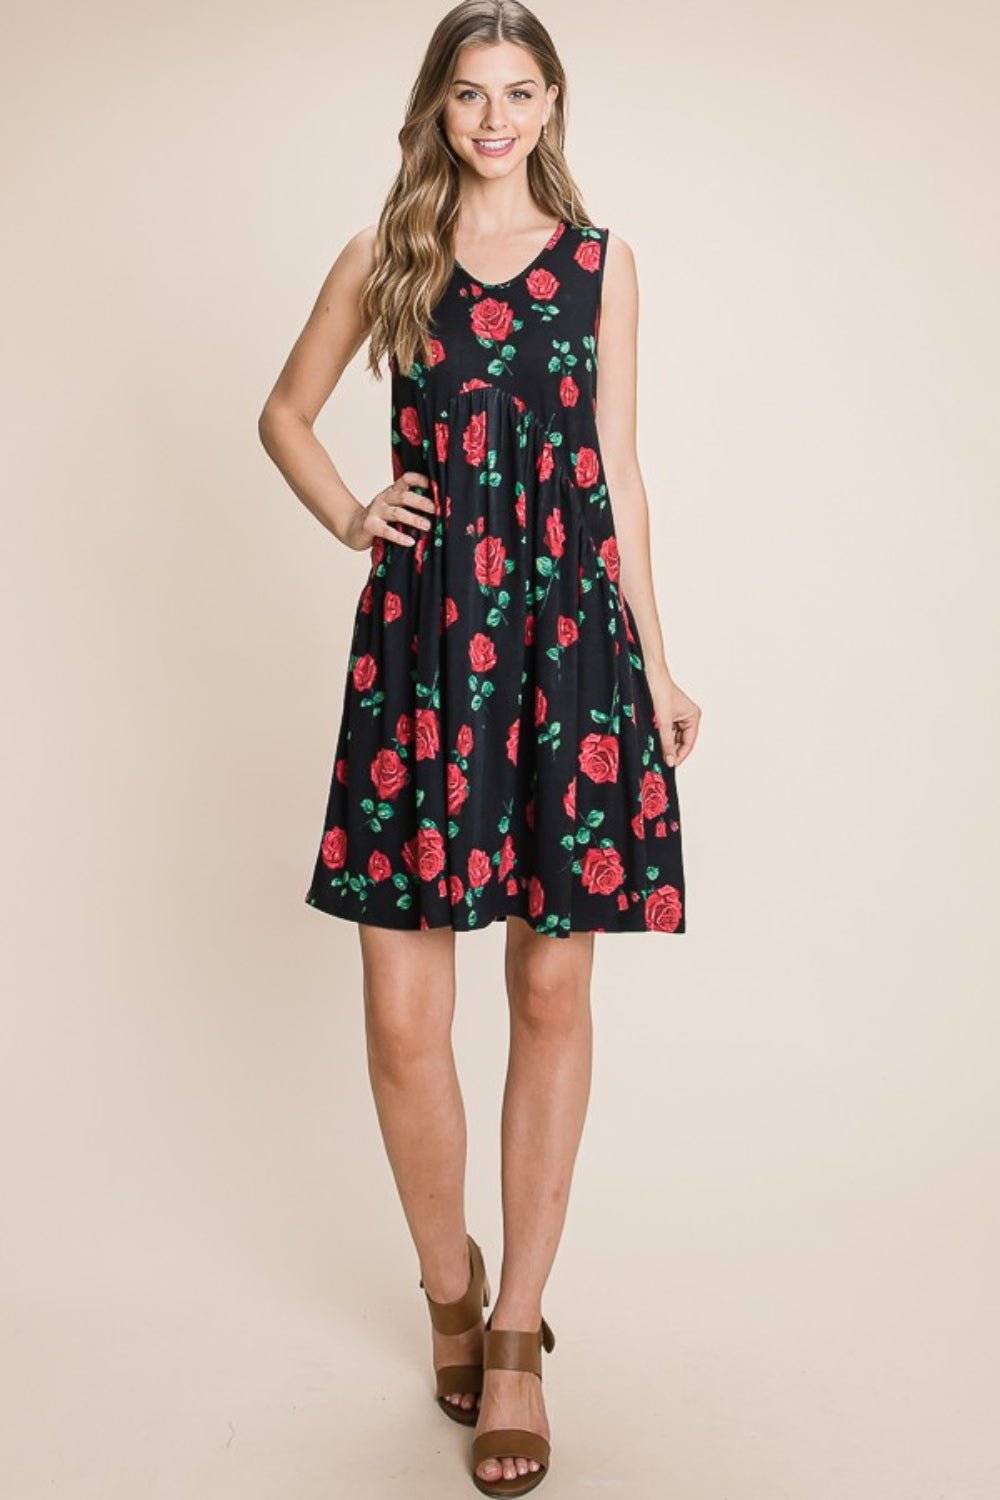 Floral Print Sleeveless Mini Dress in BlackMini DressBOMBOM